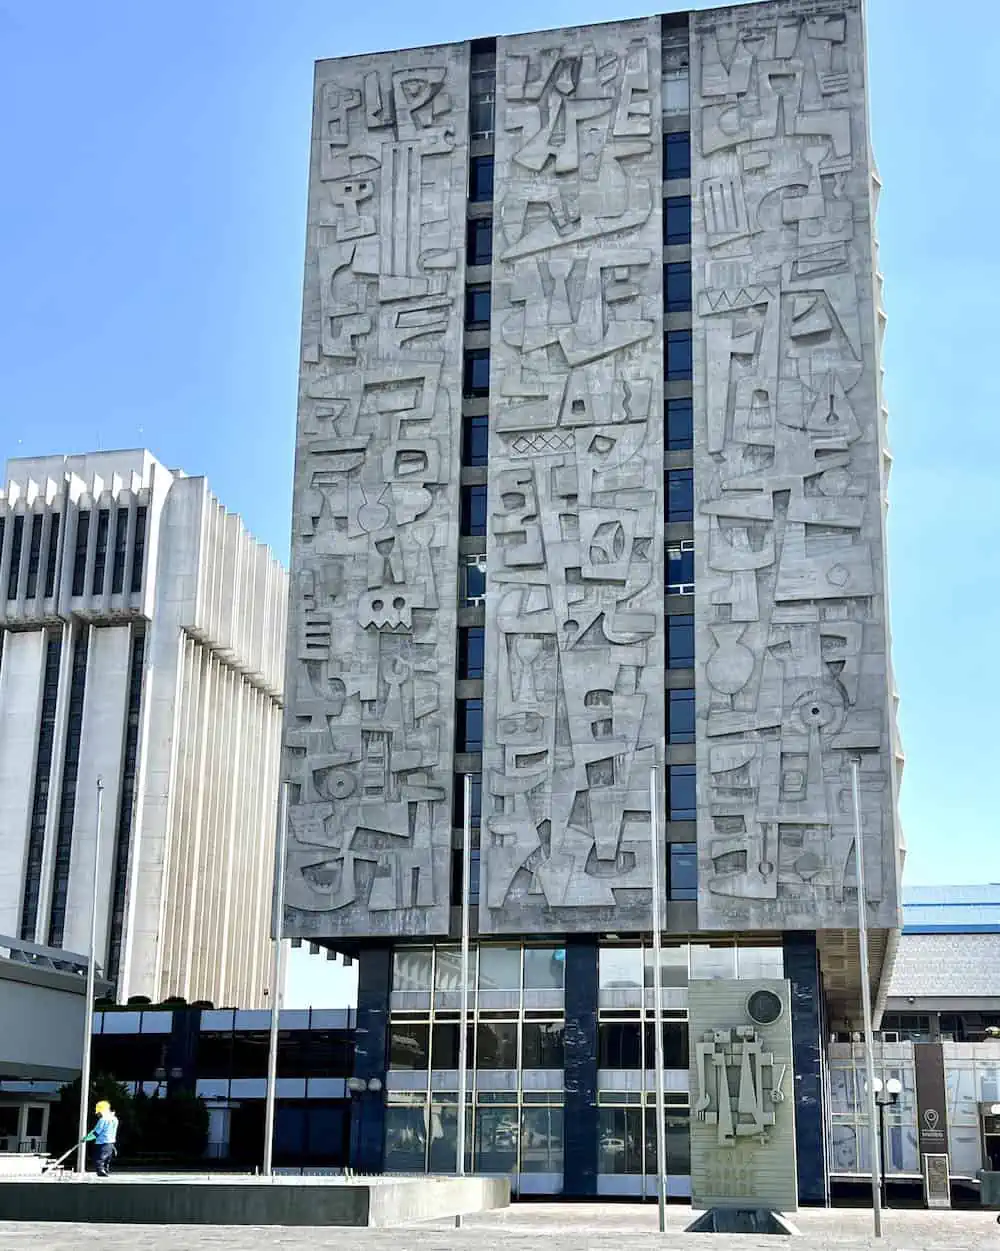 The exterior of the Banco de Guatemala.